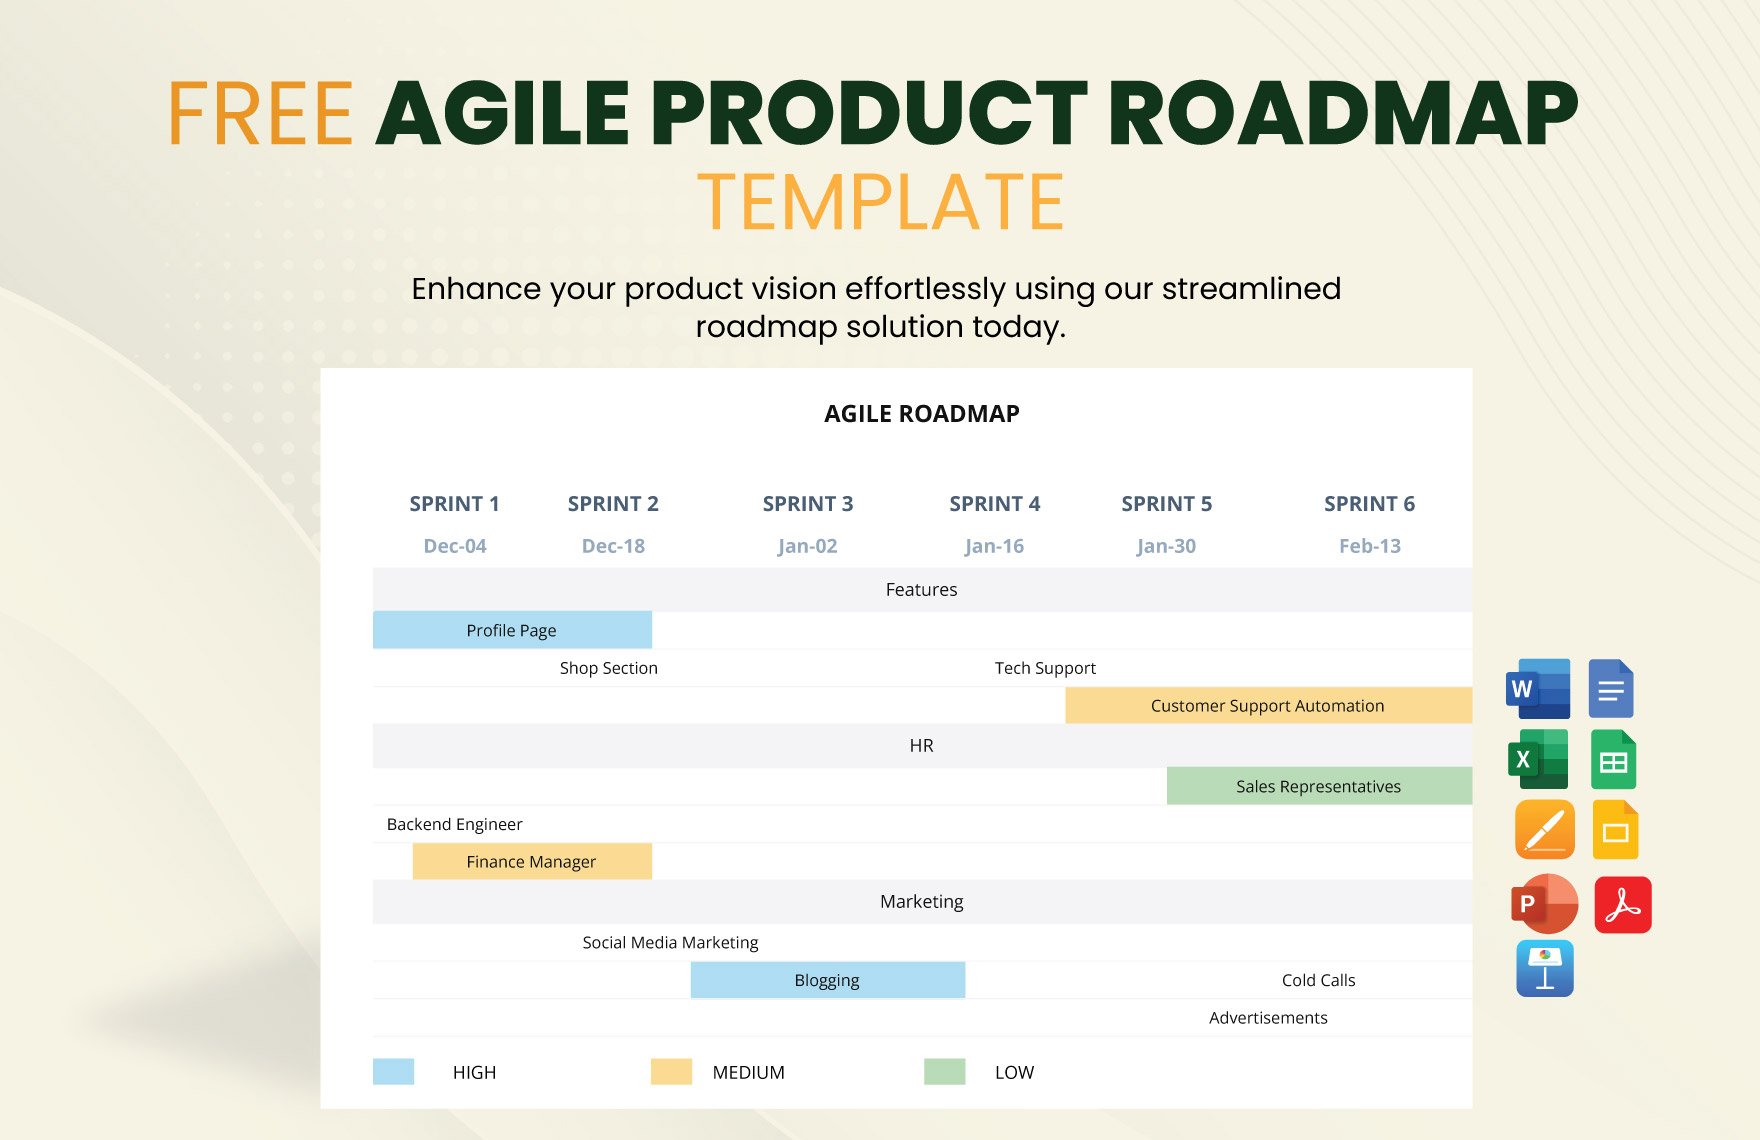 Agile Product Roadmap Template